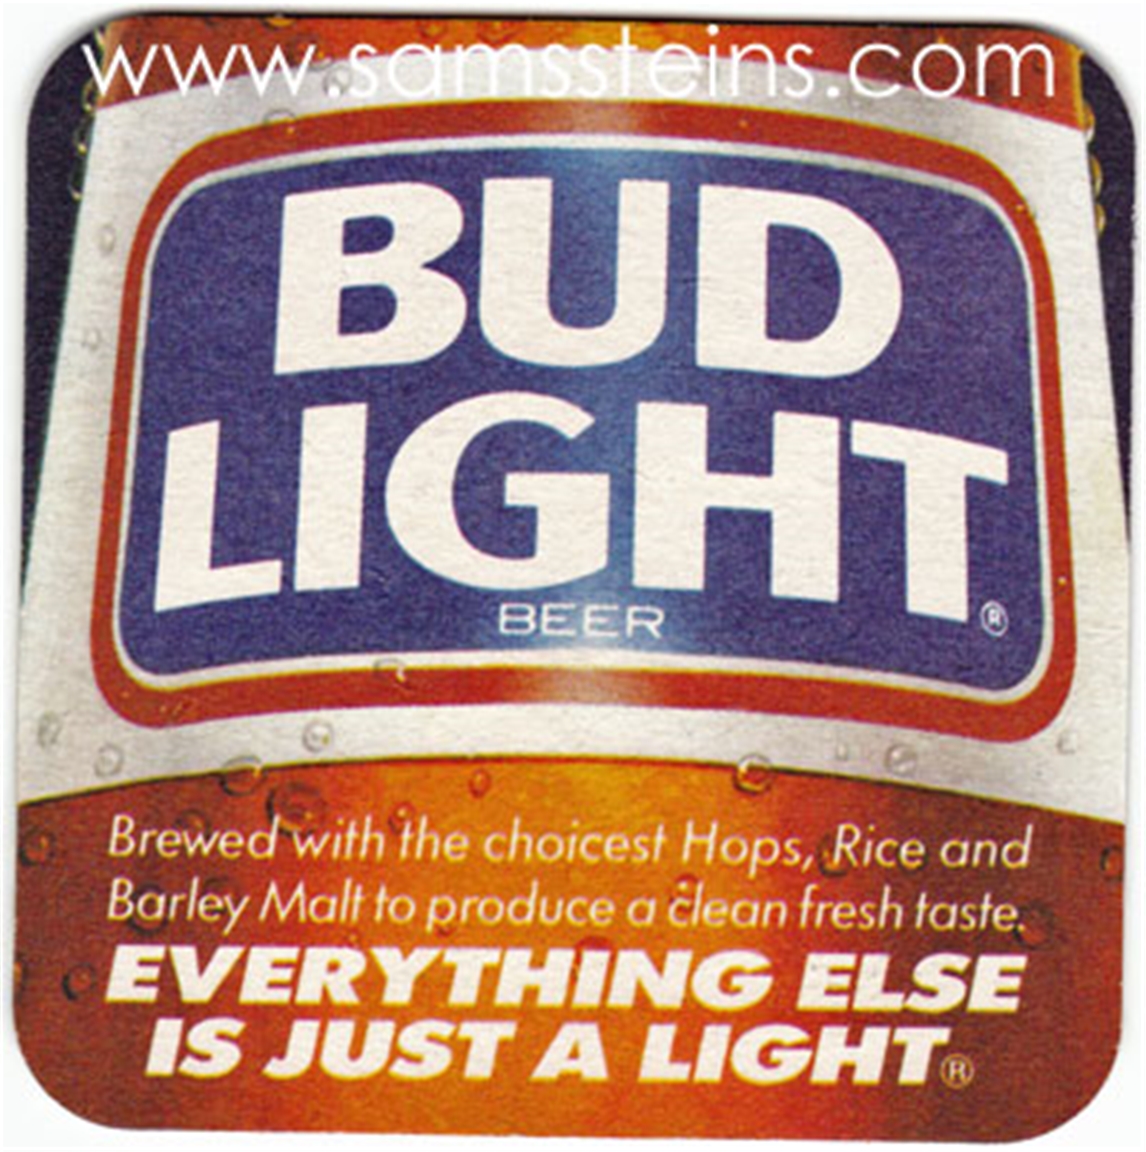 Bud Light Just a Light Beer Coaster